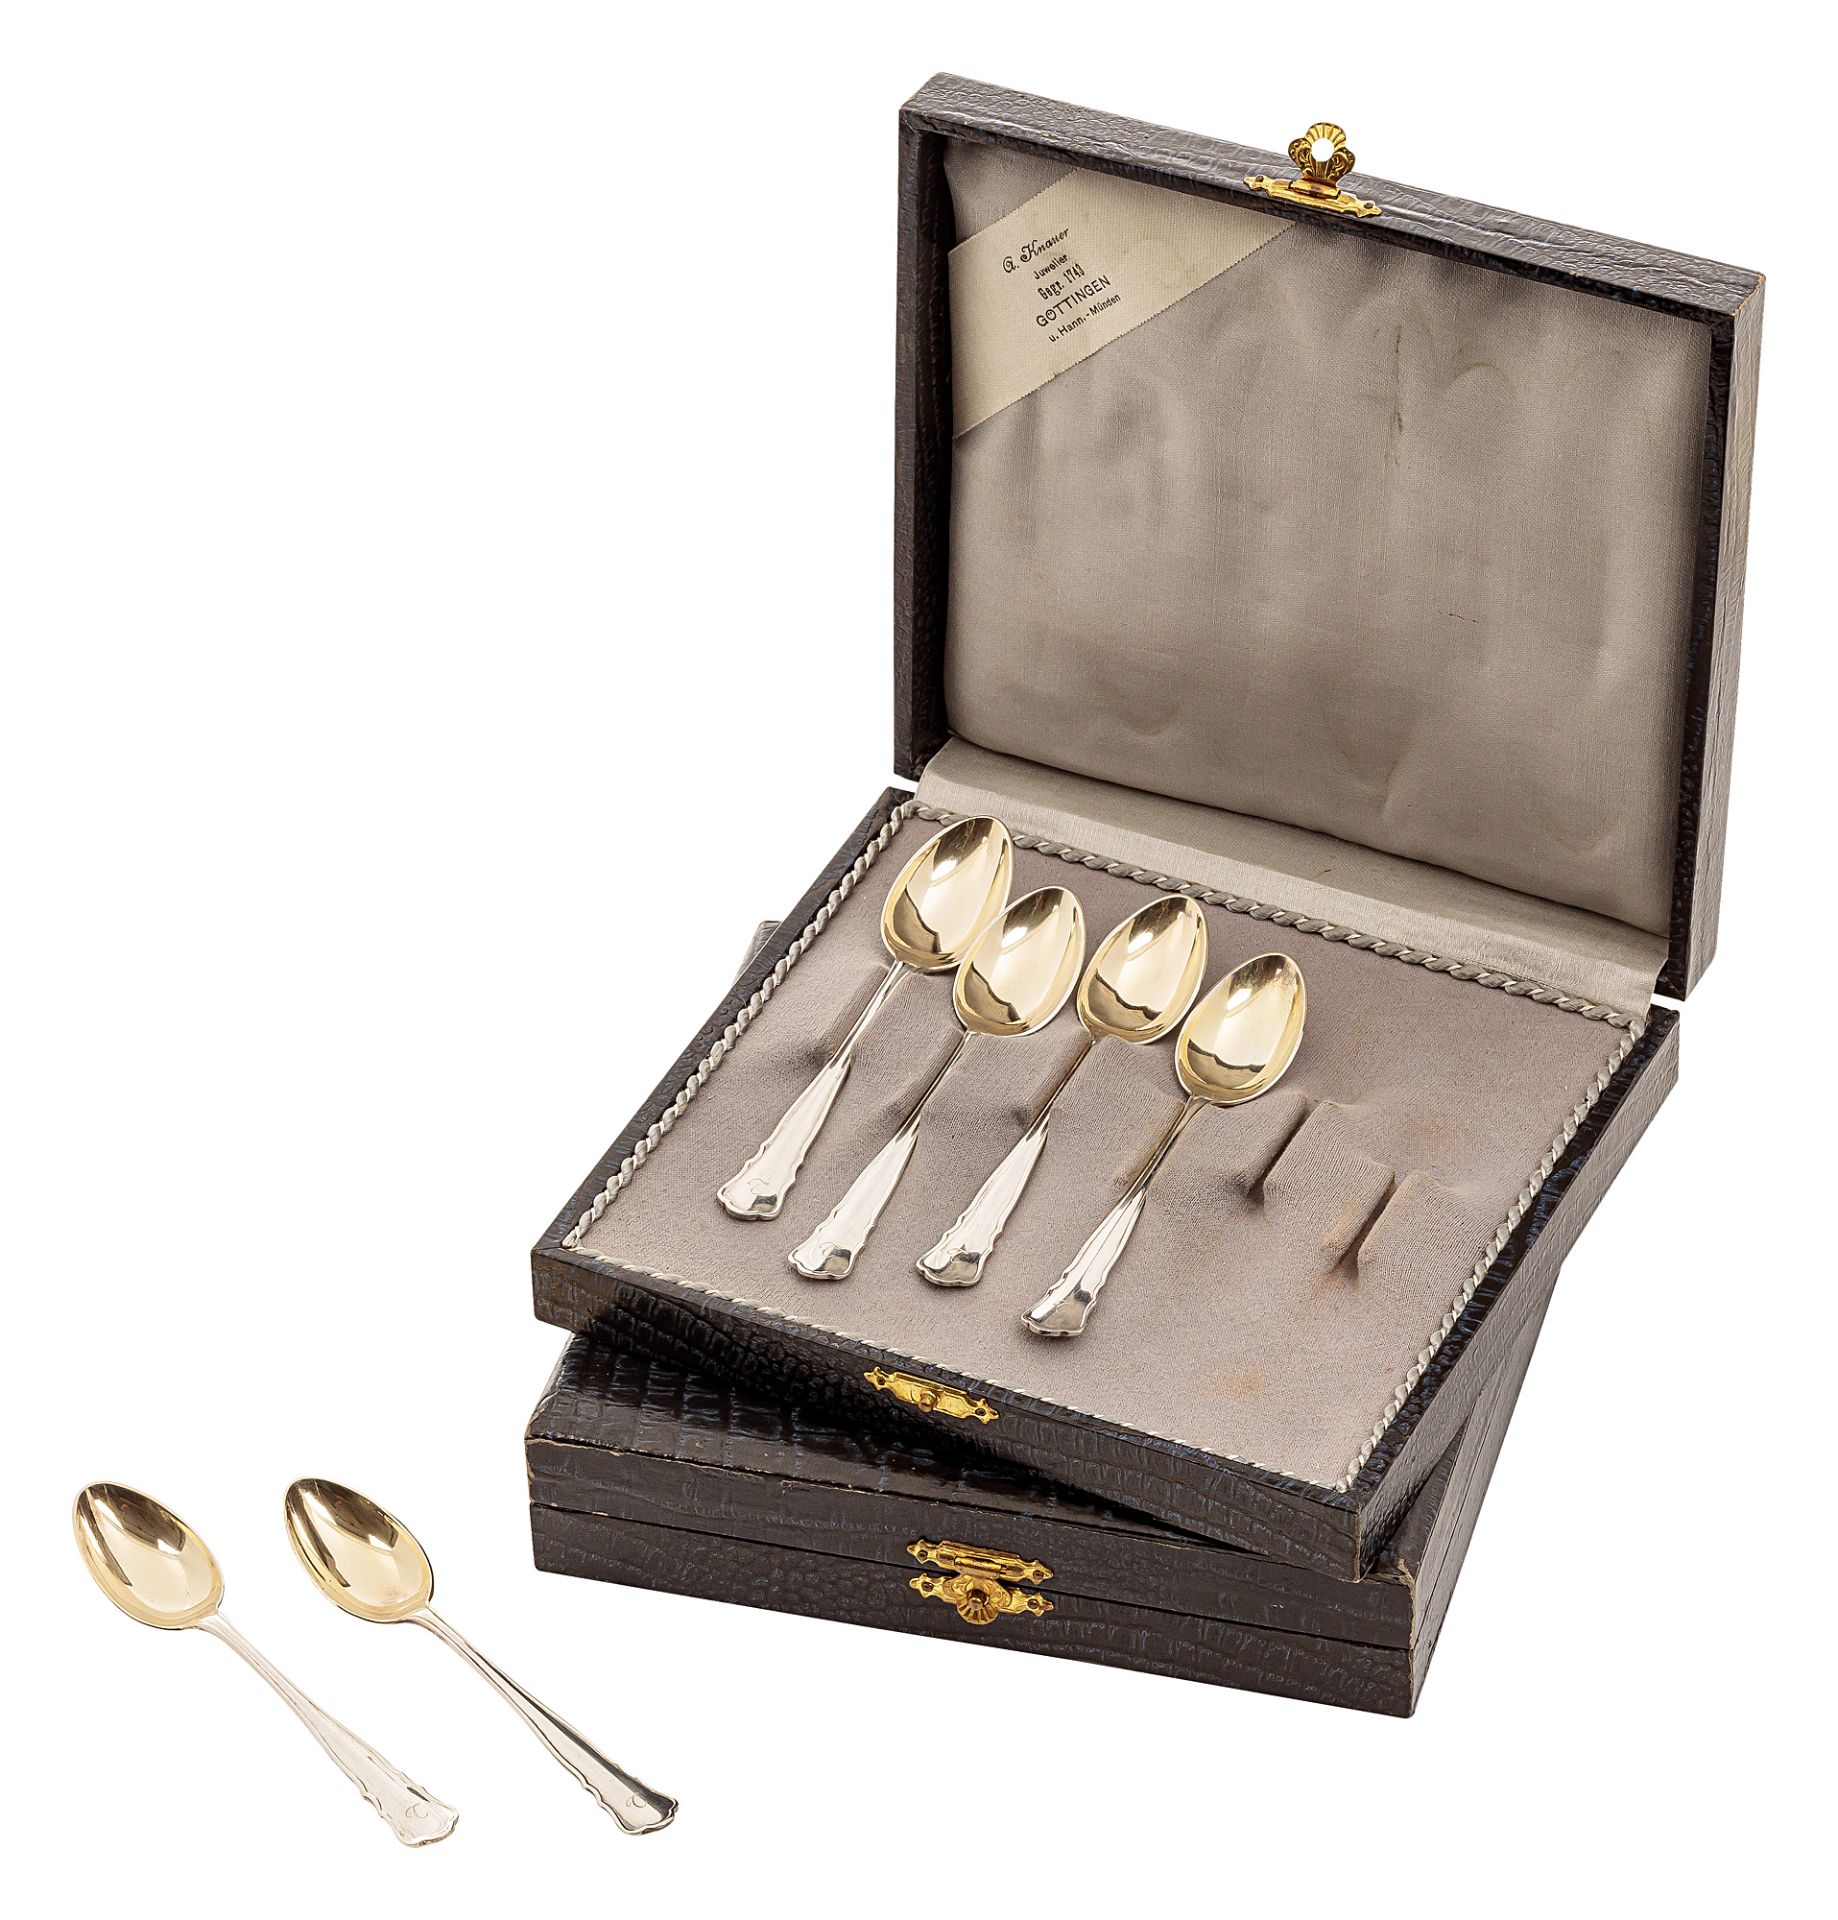 Twelve mocha spoons in cases - Image 2 of 2